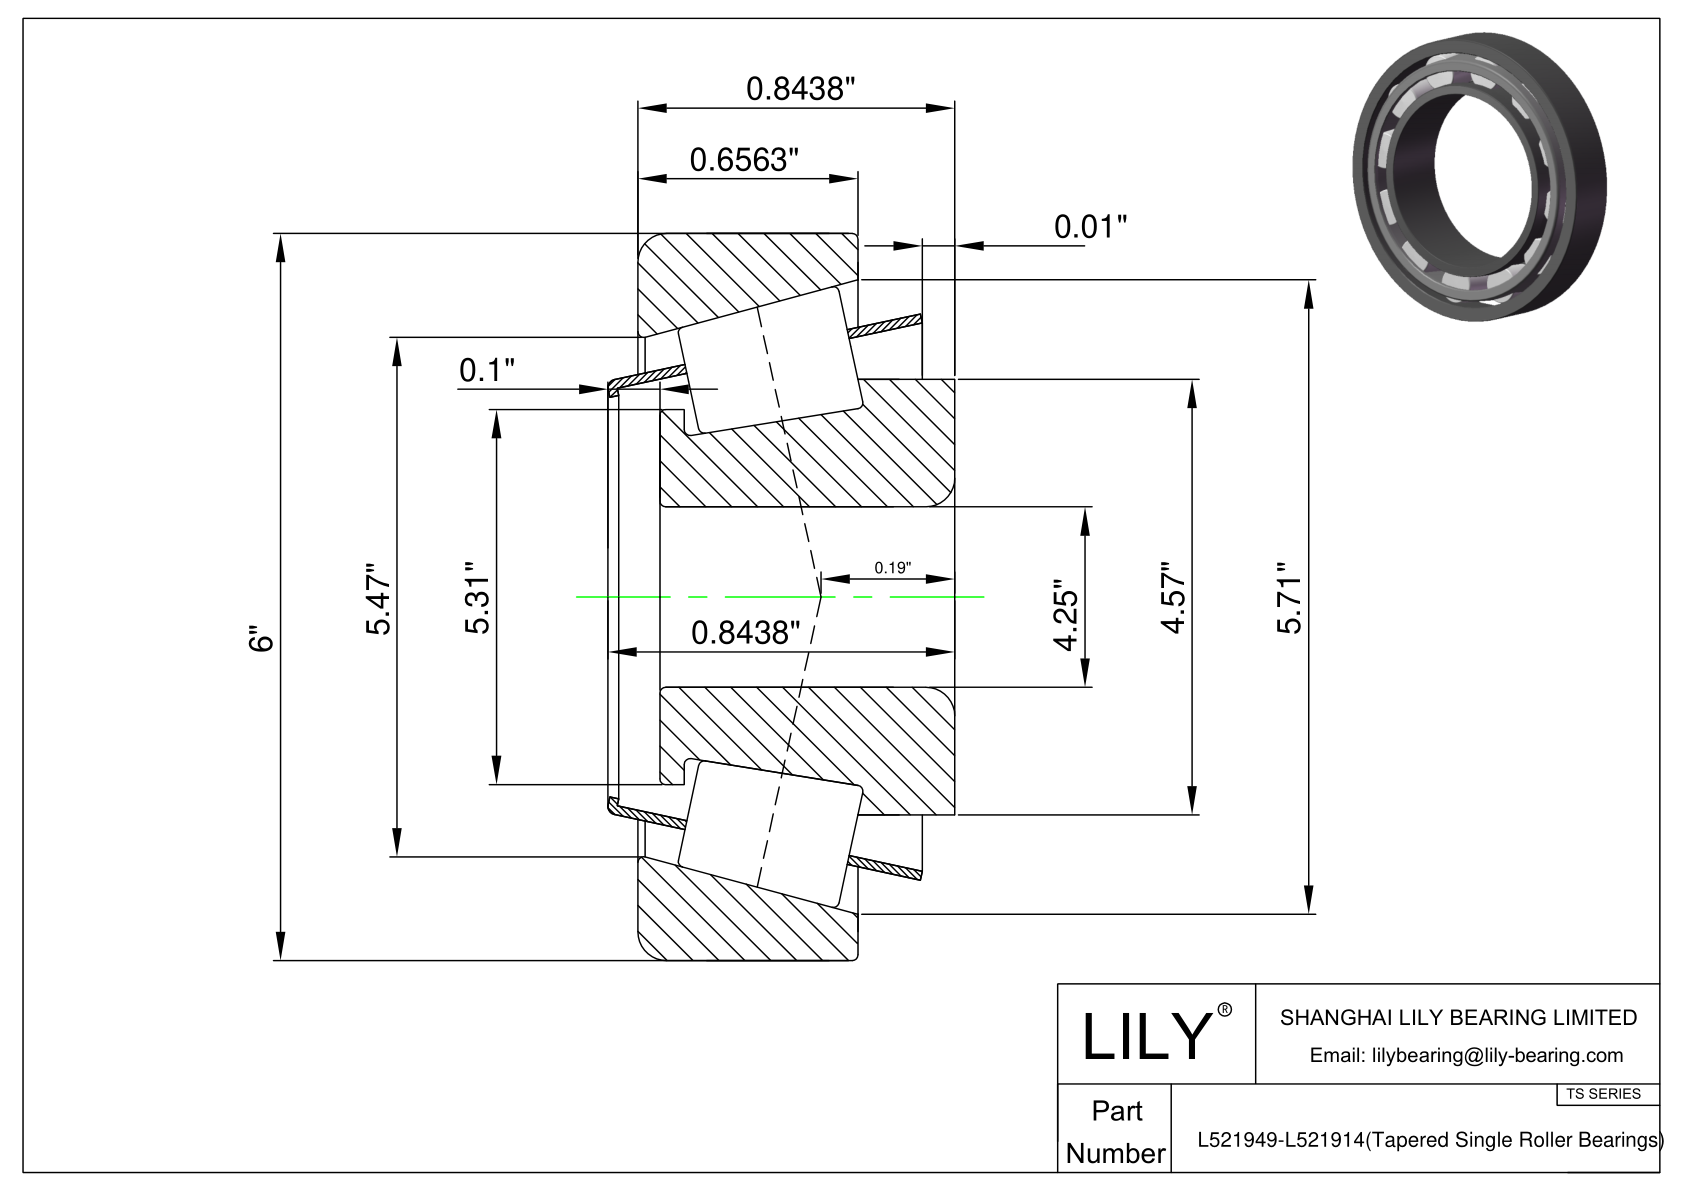 L521949-L521914 TS系列(圆锥单滚子轴承)(英制) CAD图形